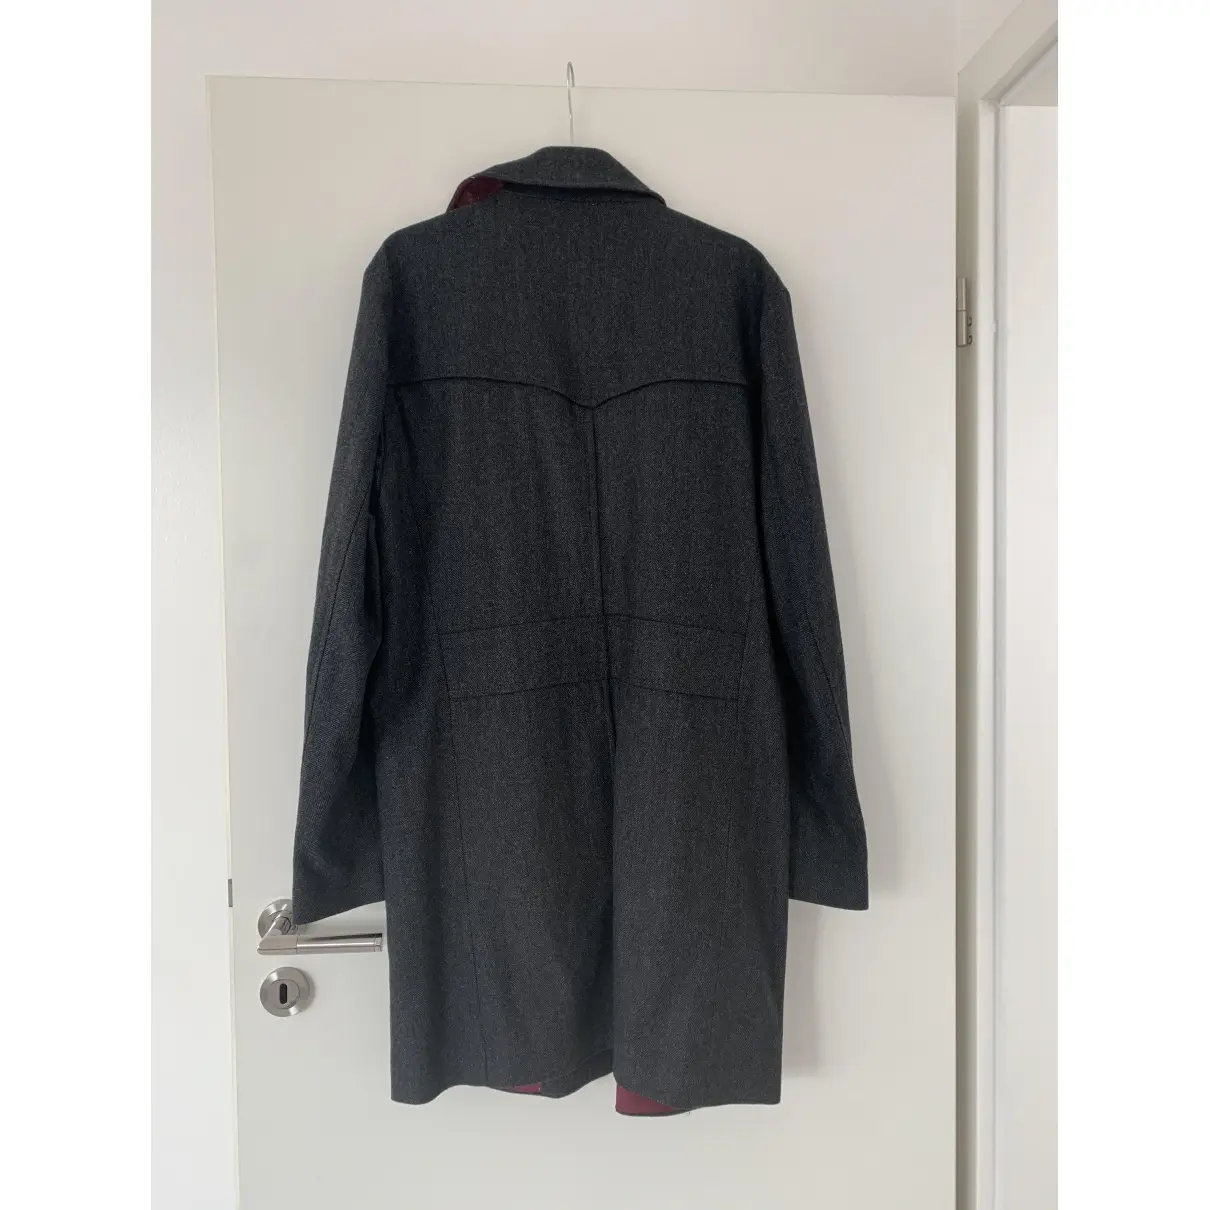 Buy Tommy Hilfiger Wool coat online